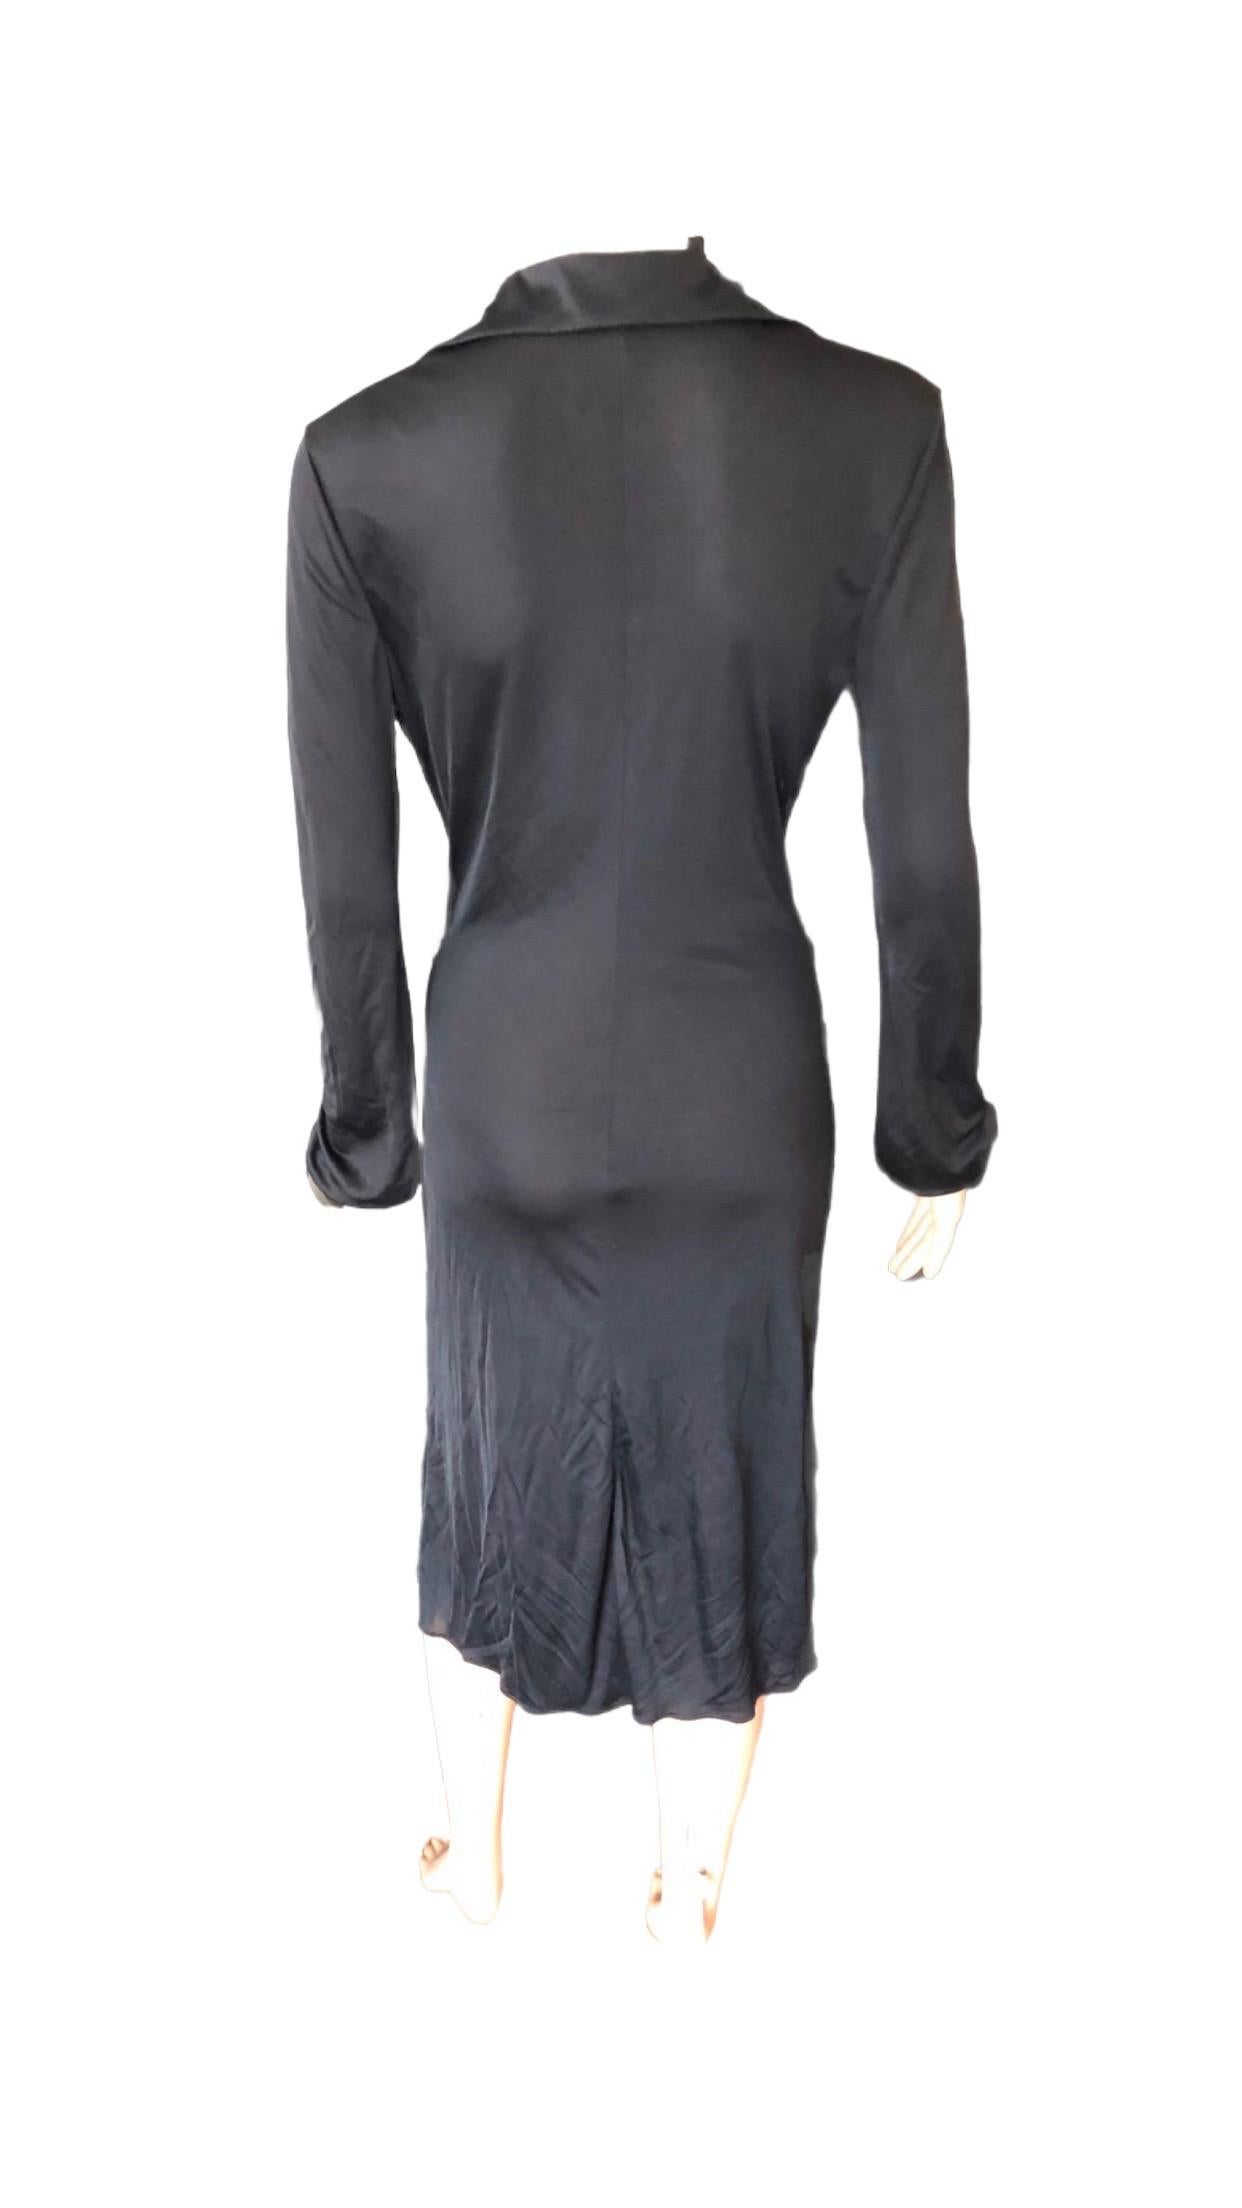 Gianni Versace S/S 2000 Runway Vintage Plunging Neckline Black Dress  7